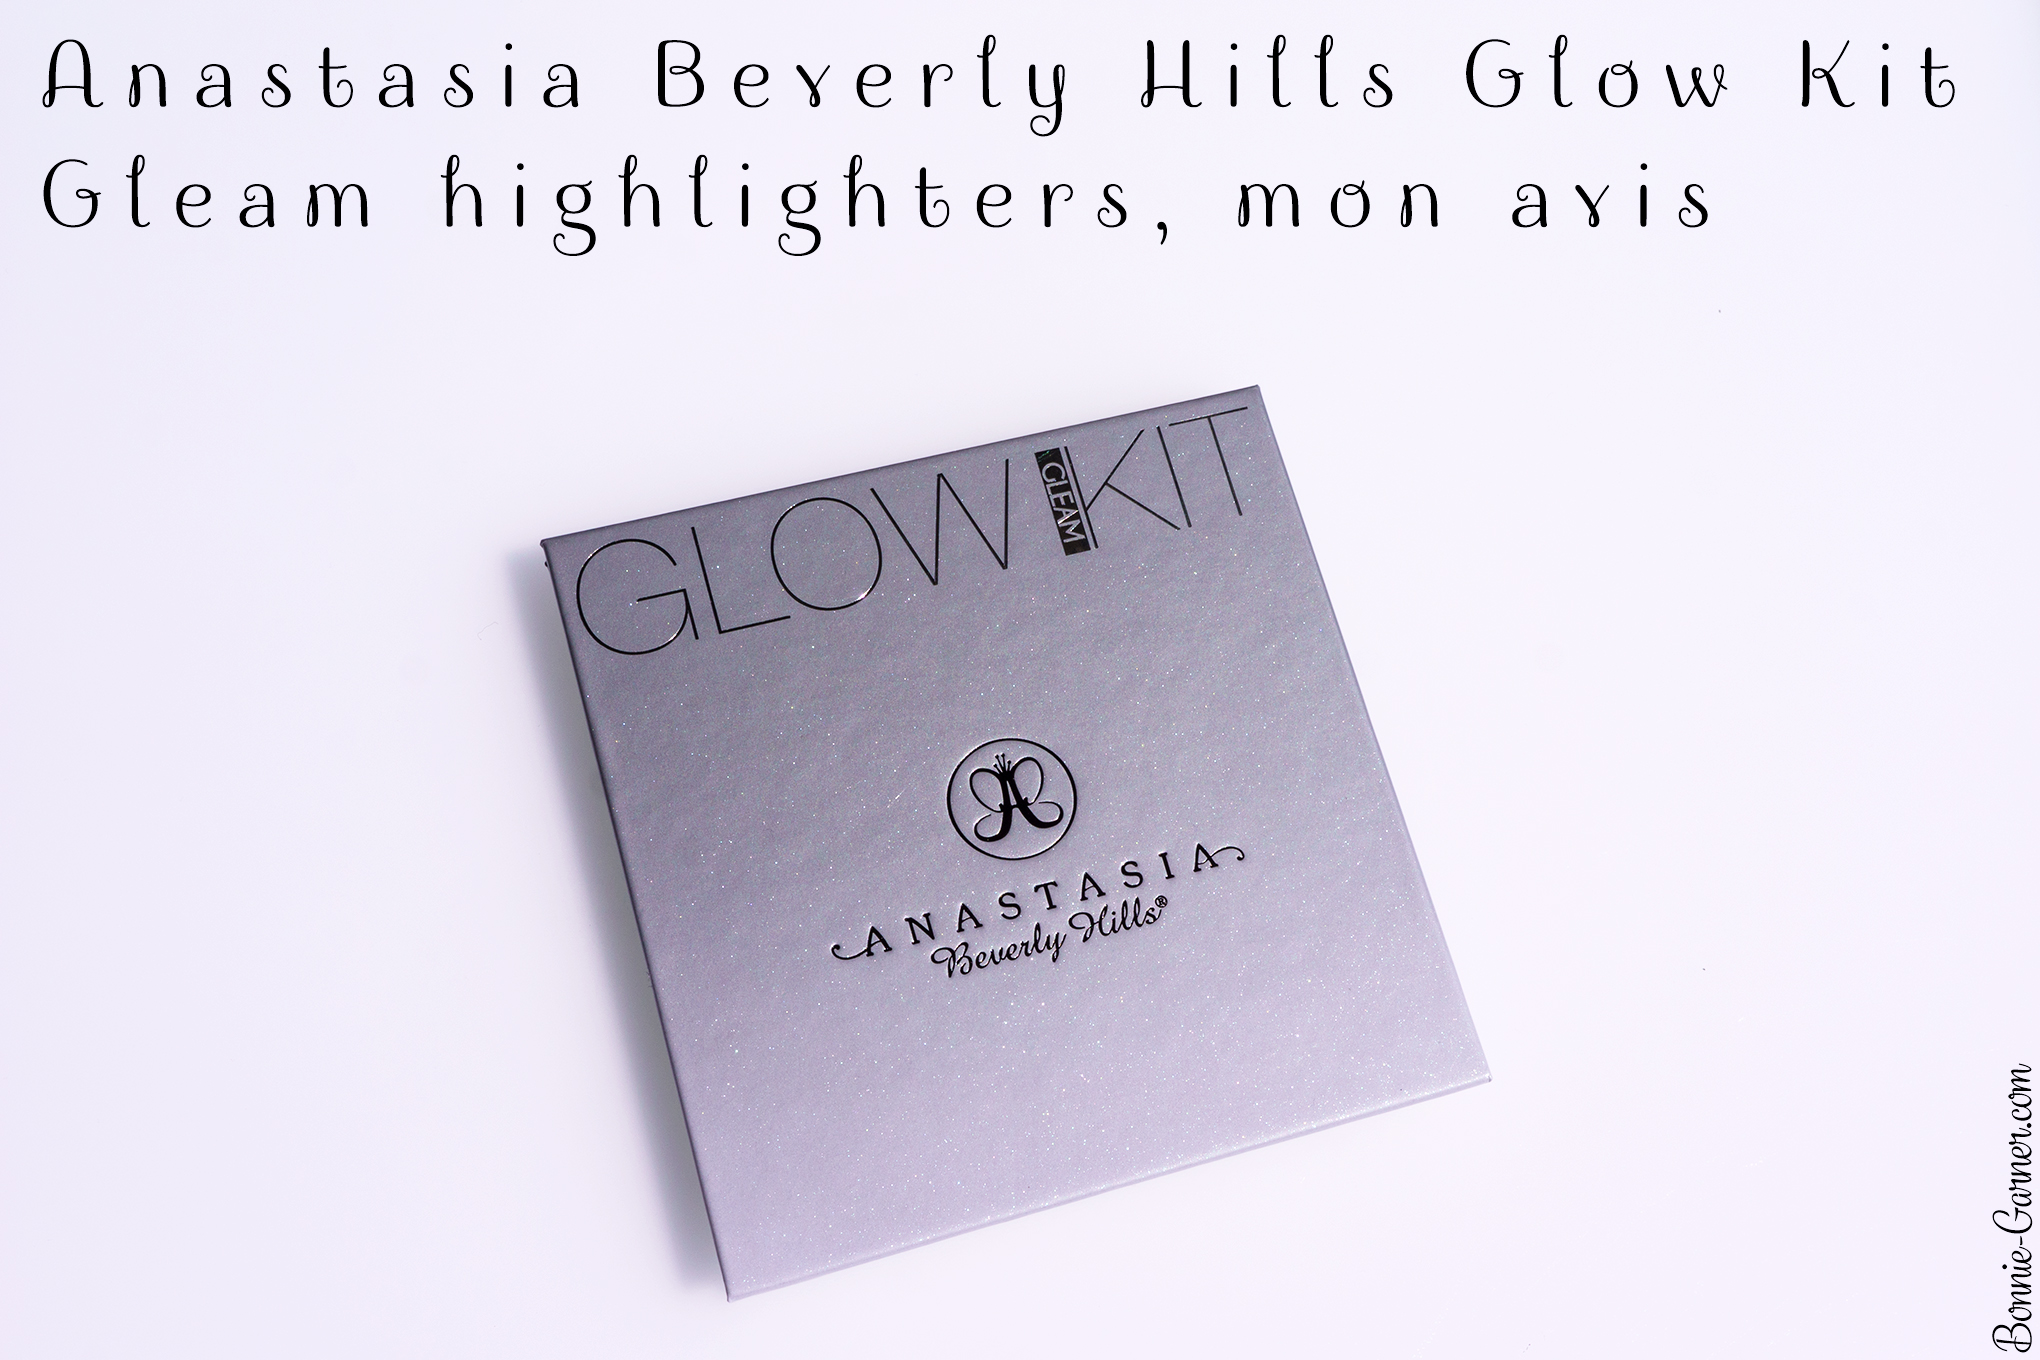 Anastasia Beverly Hills Glow Kit Gleam highlighters, mon avis